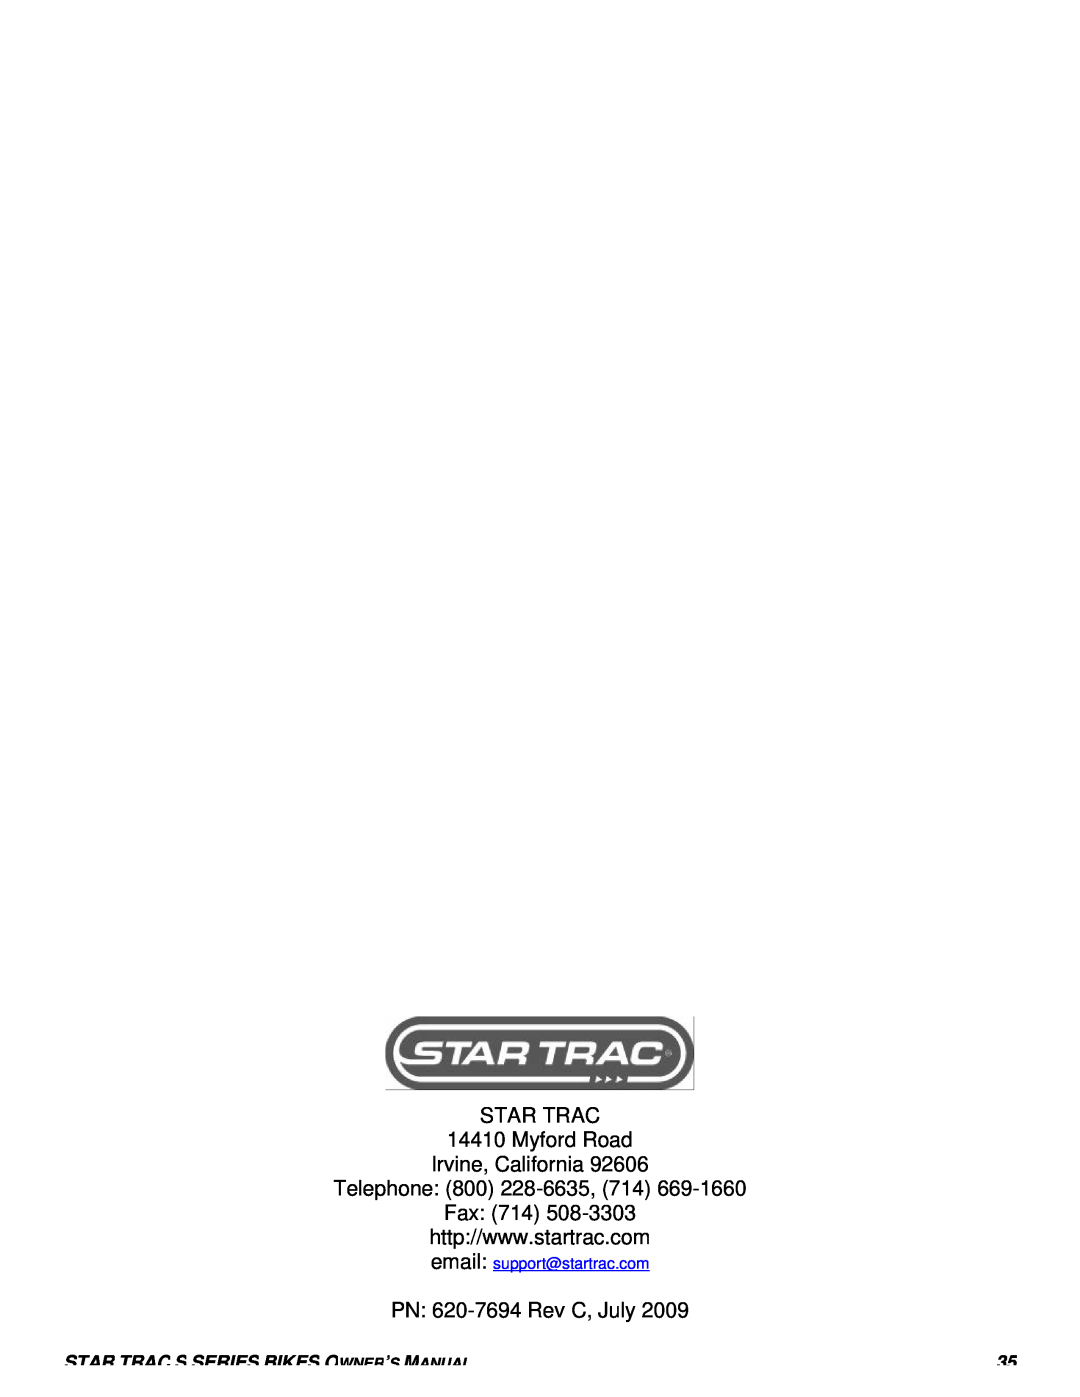 Star Trac S-UB UPRIGHT BIKE manual STAR TRAC 14410 Myford Road Irvine, California, Telephone 800 228-6635, 714 Fax 714 